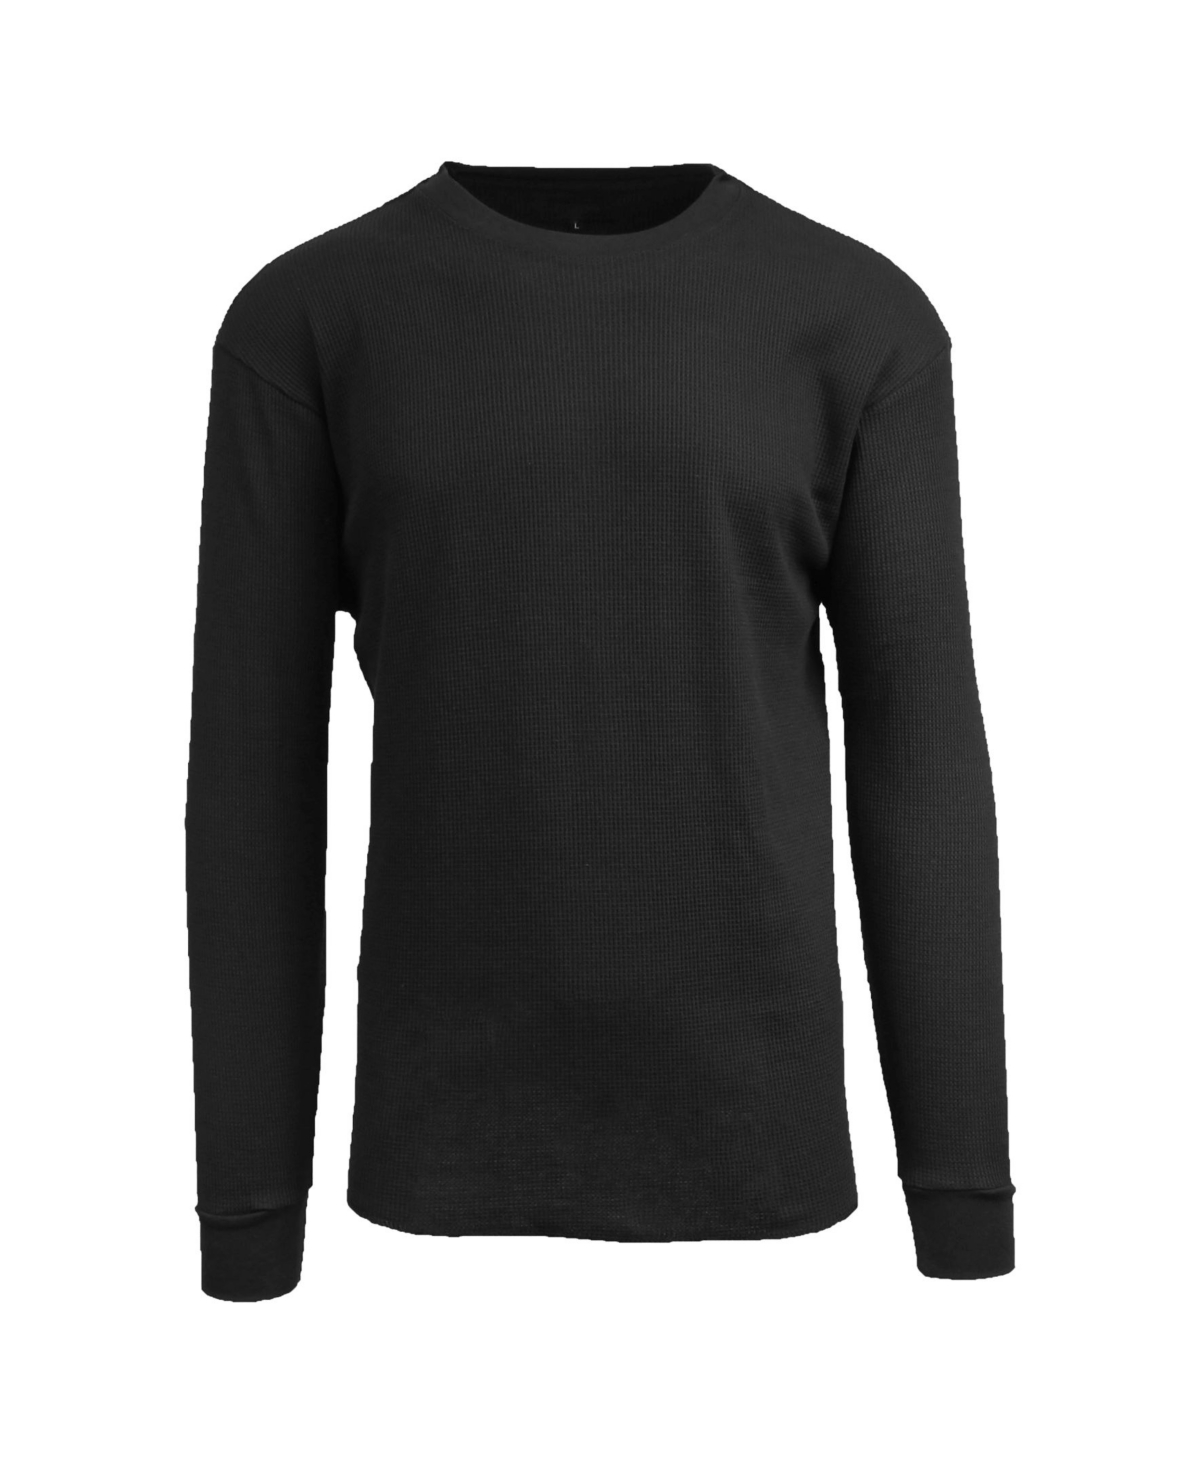 Men's Waffle Knit Thermal Shirt - Black